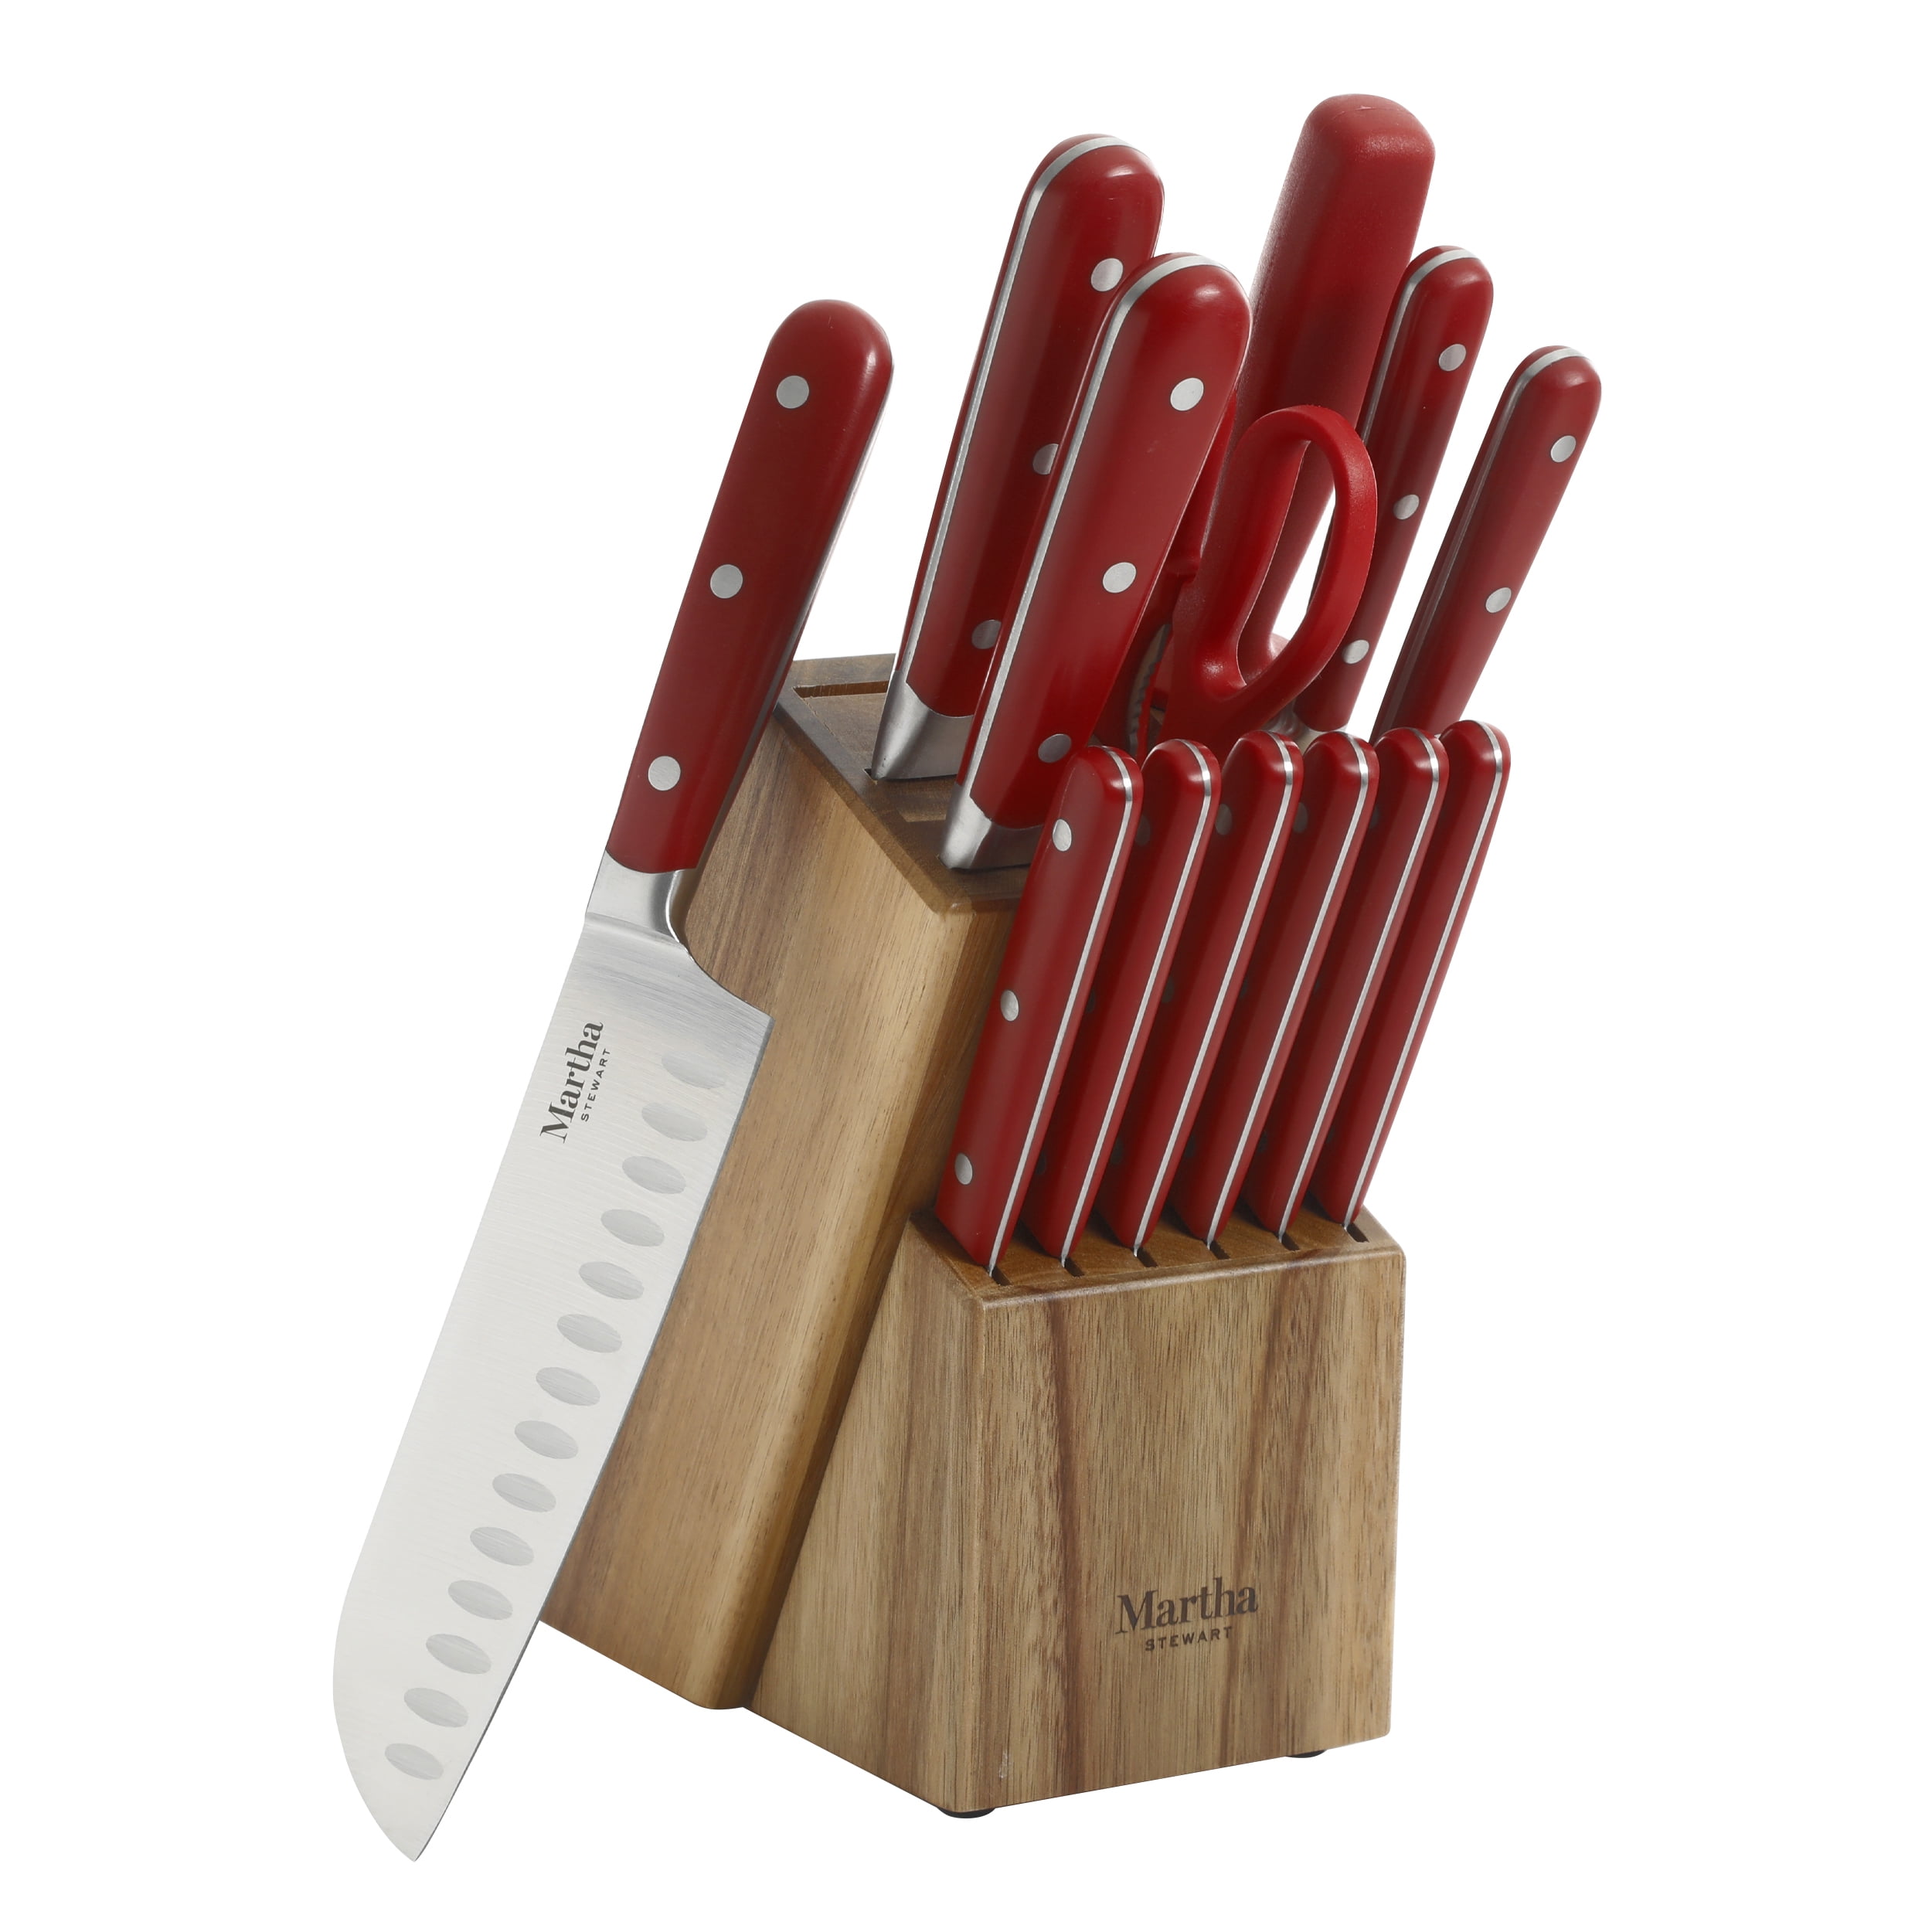 Martha Stewart 14pc Cutlery Set with Wood Block - Red - Curacao 